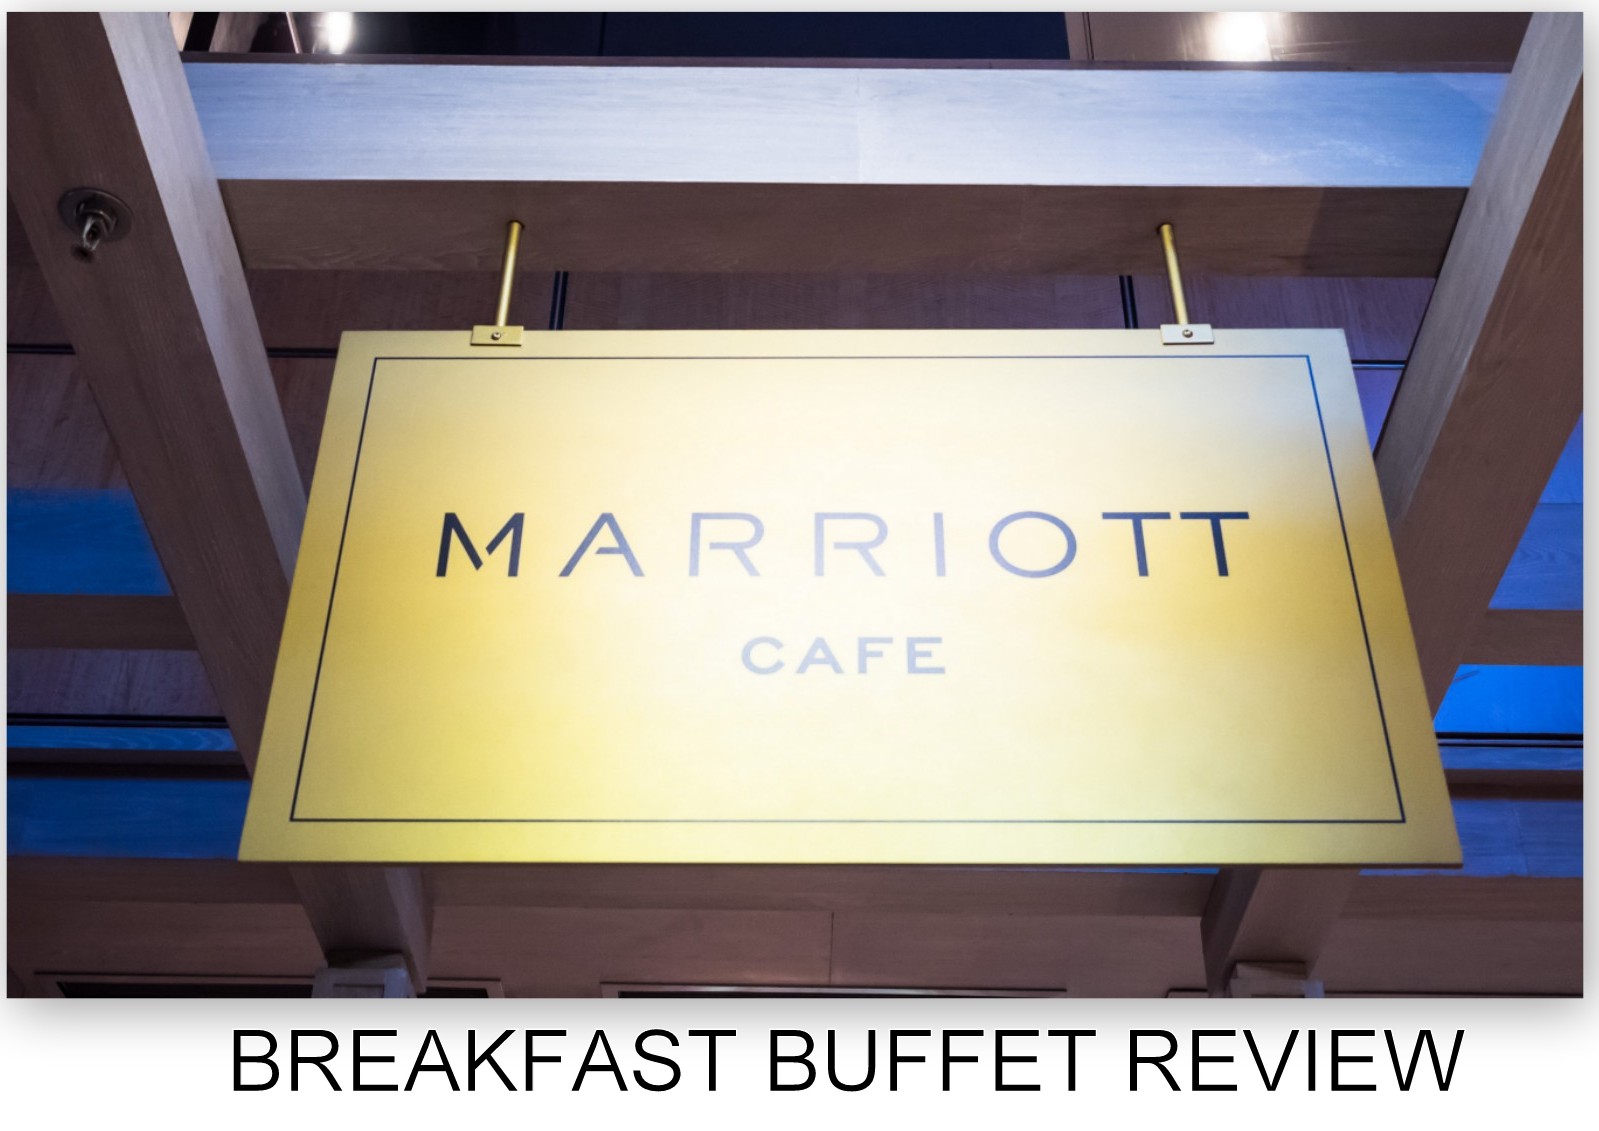 Singapore Marriott Cafe : Breakfast Buffet Review 